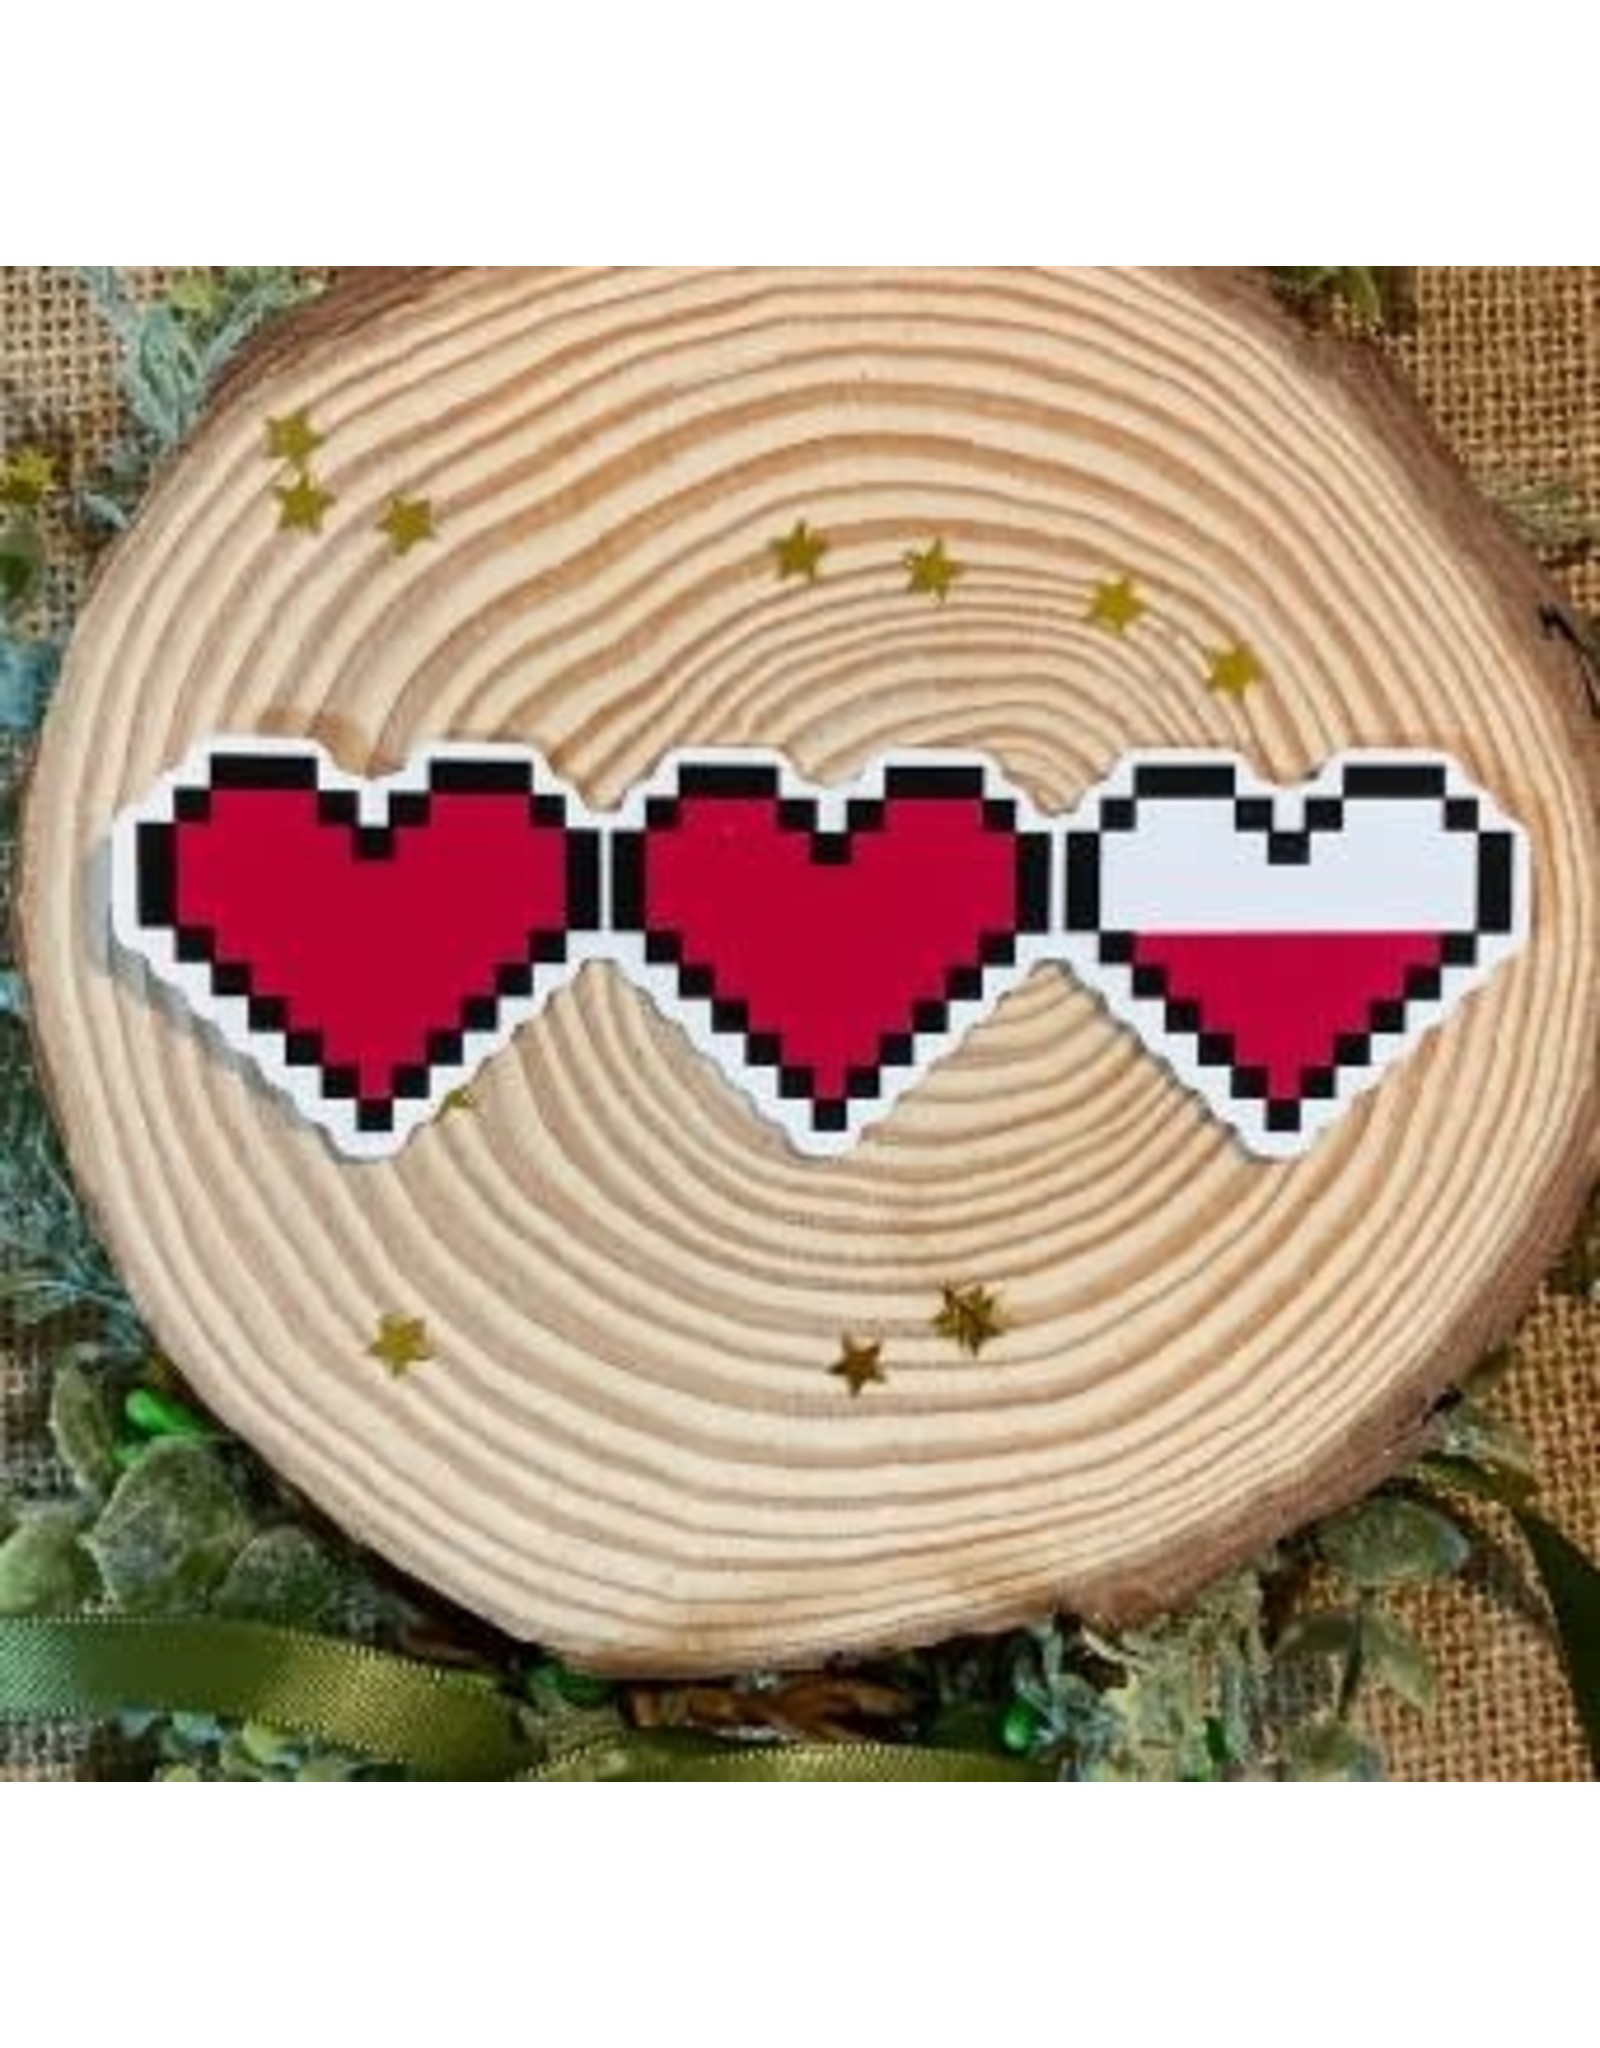 Pixel Heart Life Bar Vinyl Sticker